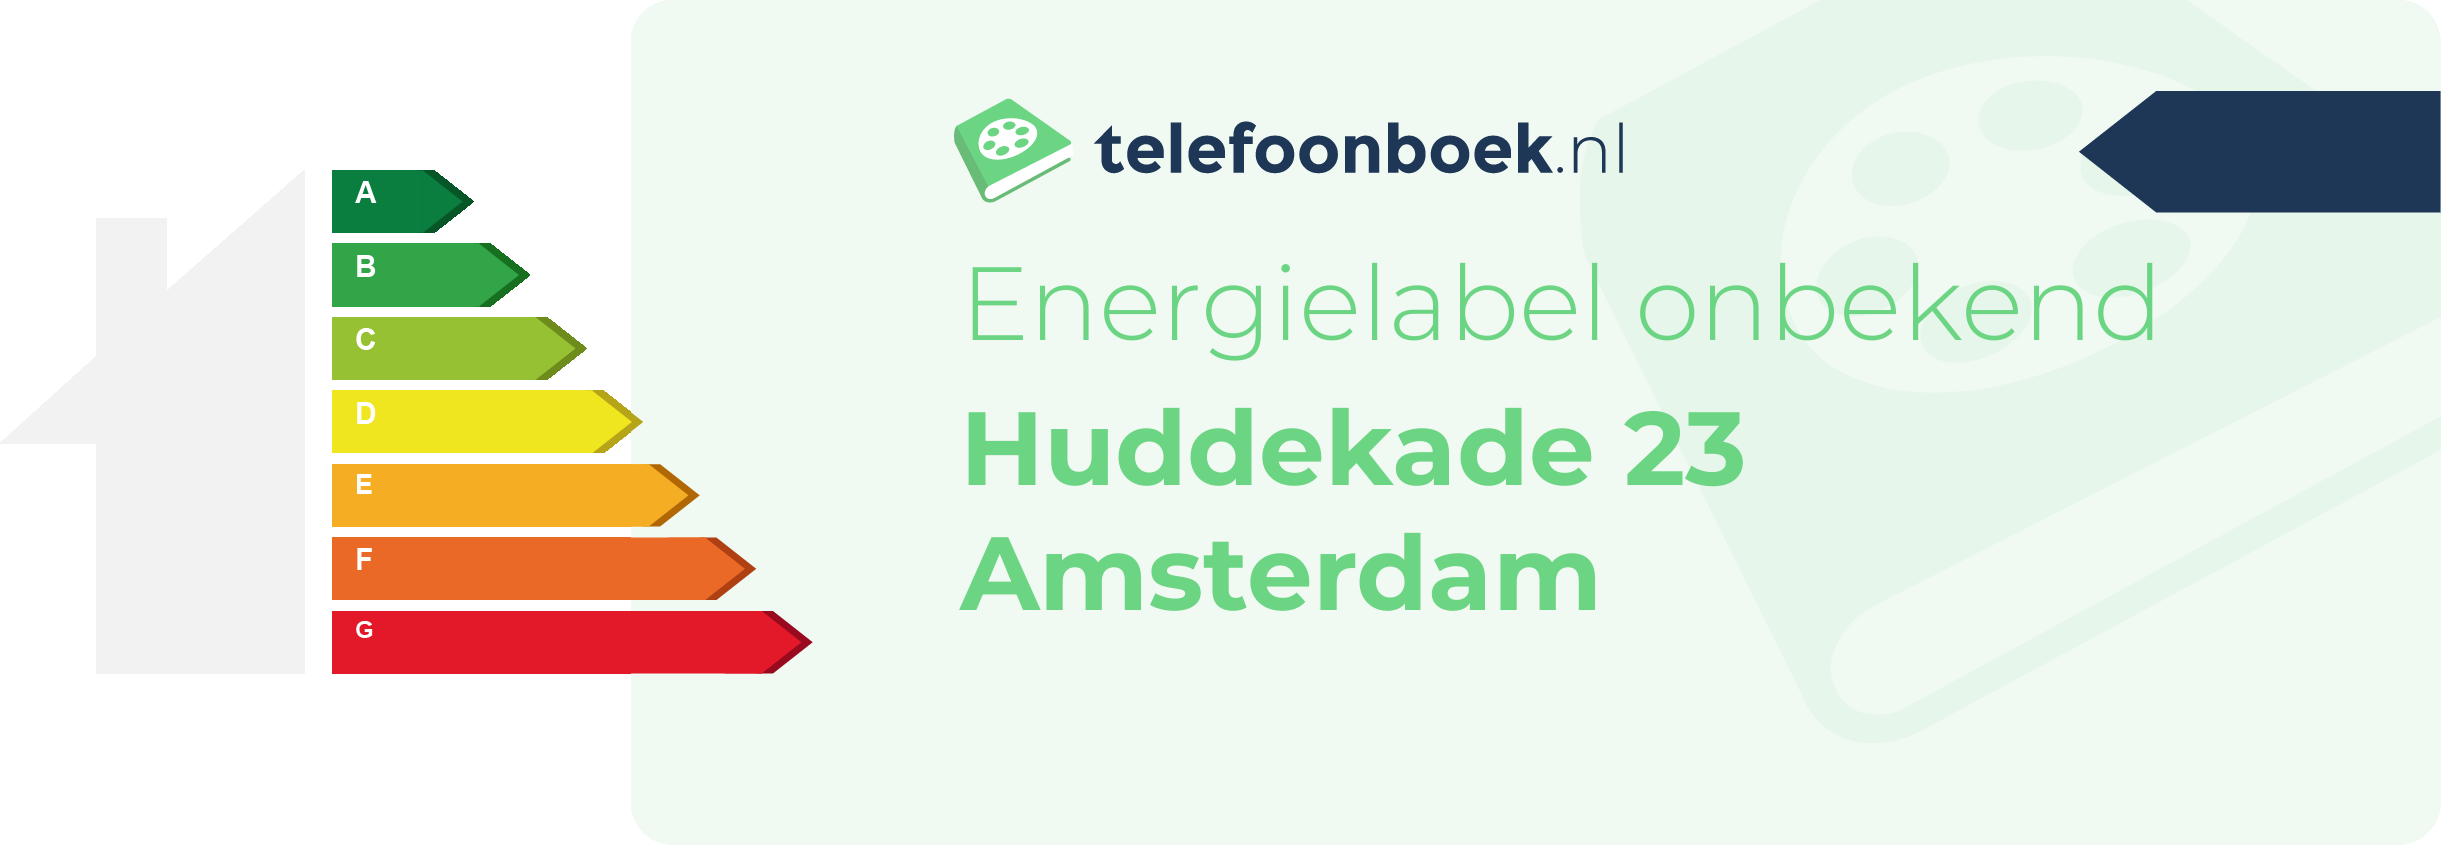 Energielabel Huddekade 23 Amsterdam